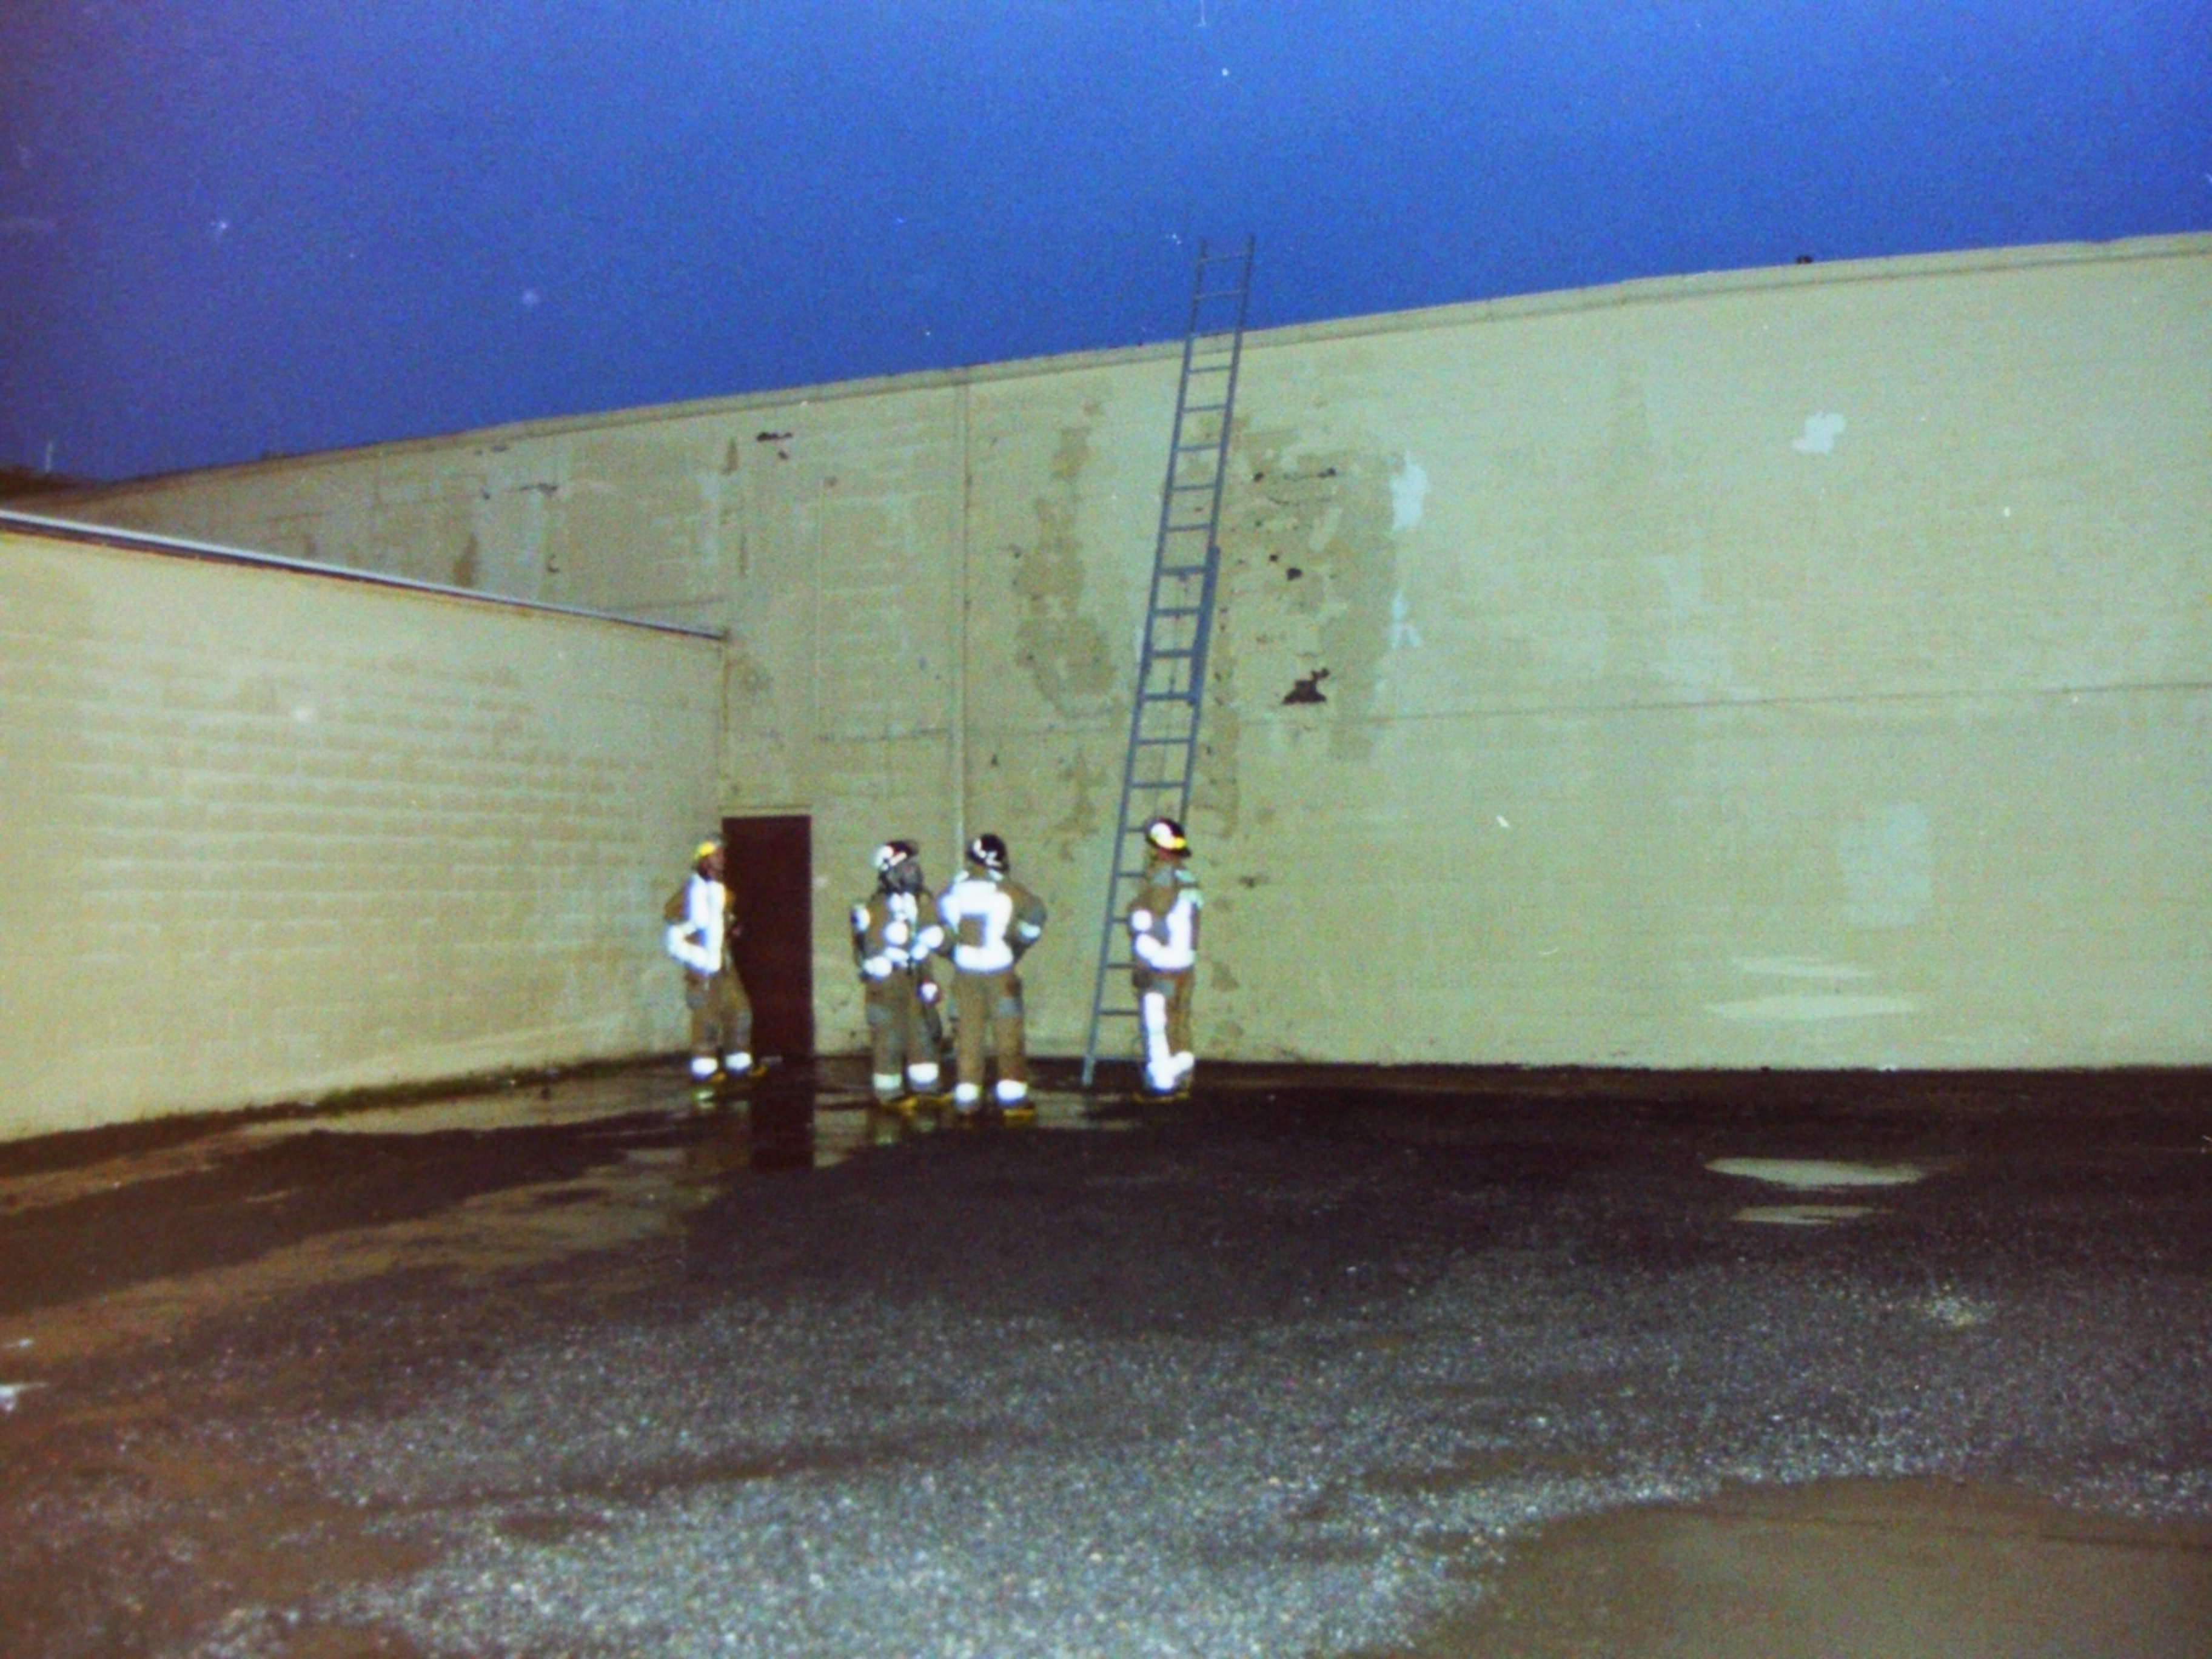 09-03-04  Response - Grand Union, Car Fire